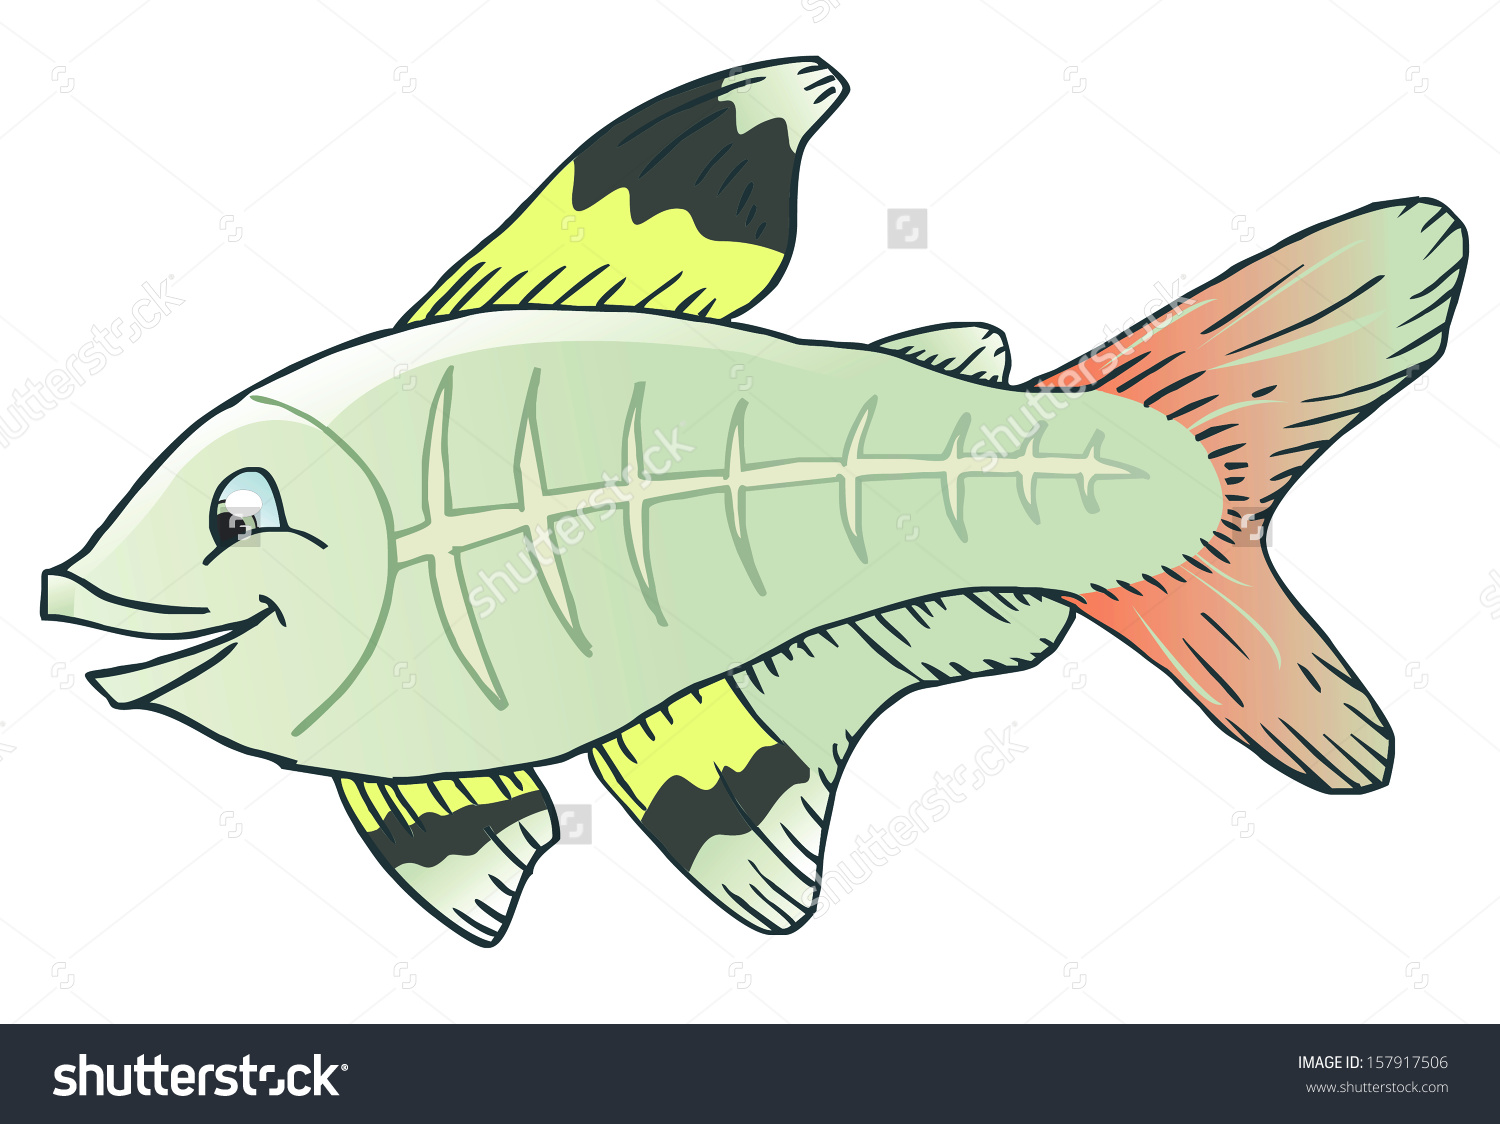 X-ray tetra cartoon fish. Save to a lightbox